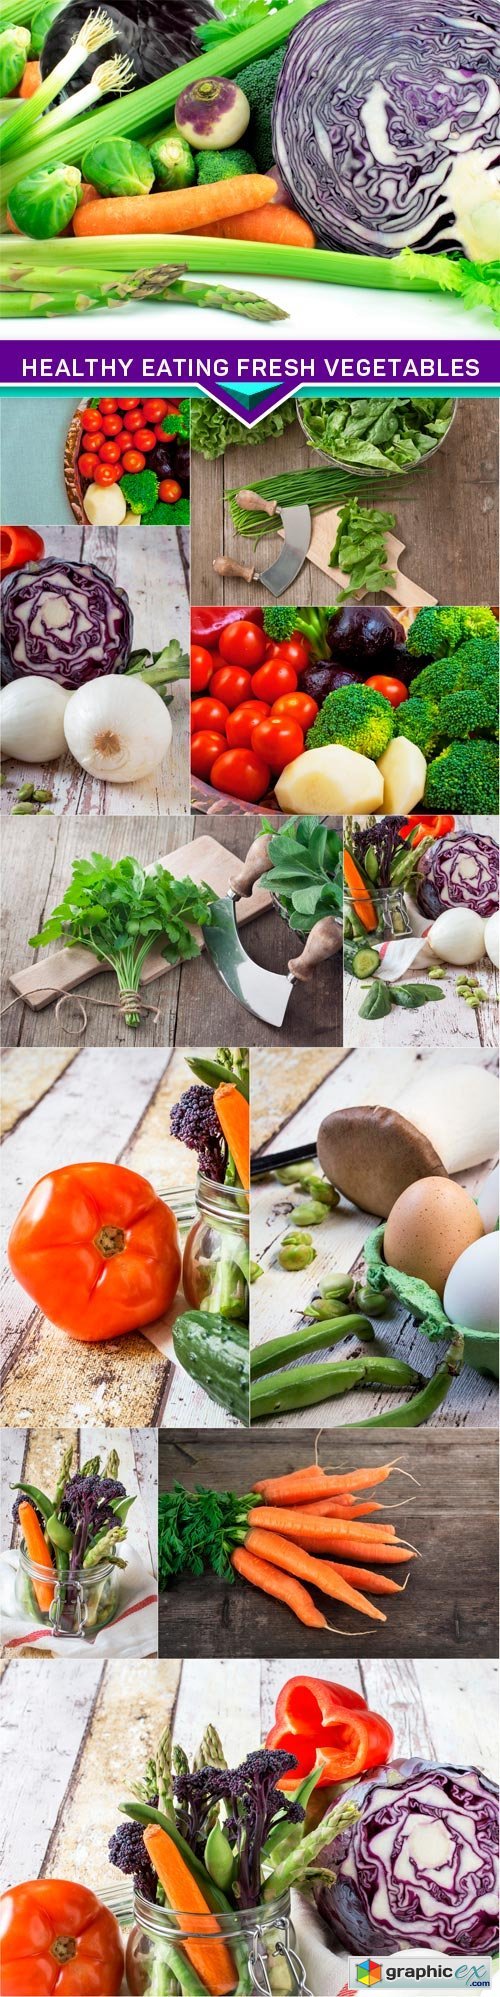 Healthy eating fresh vegetables 12x JPEG